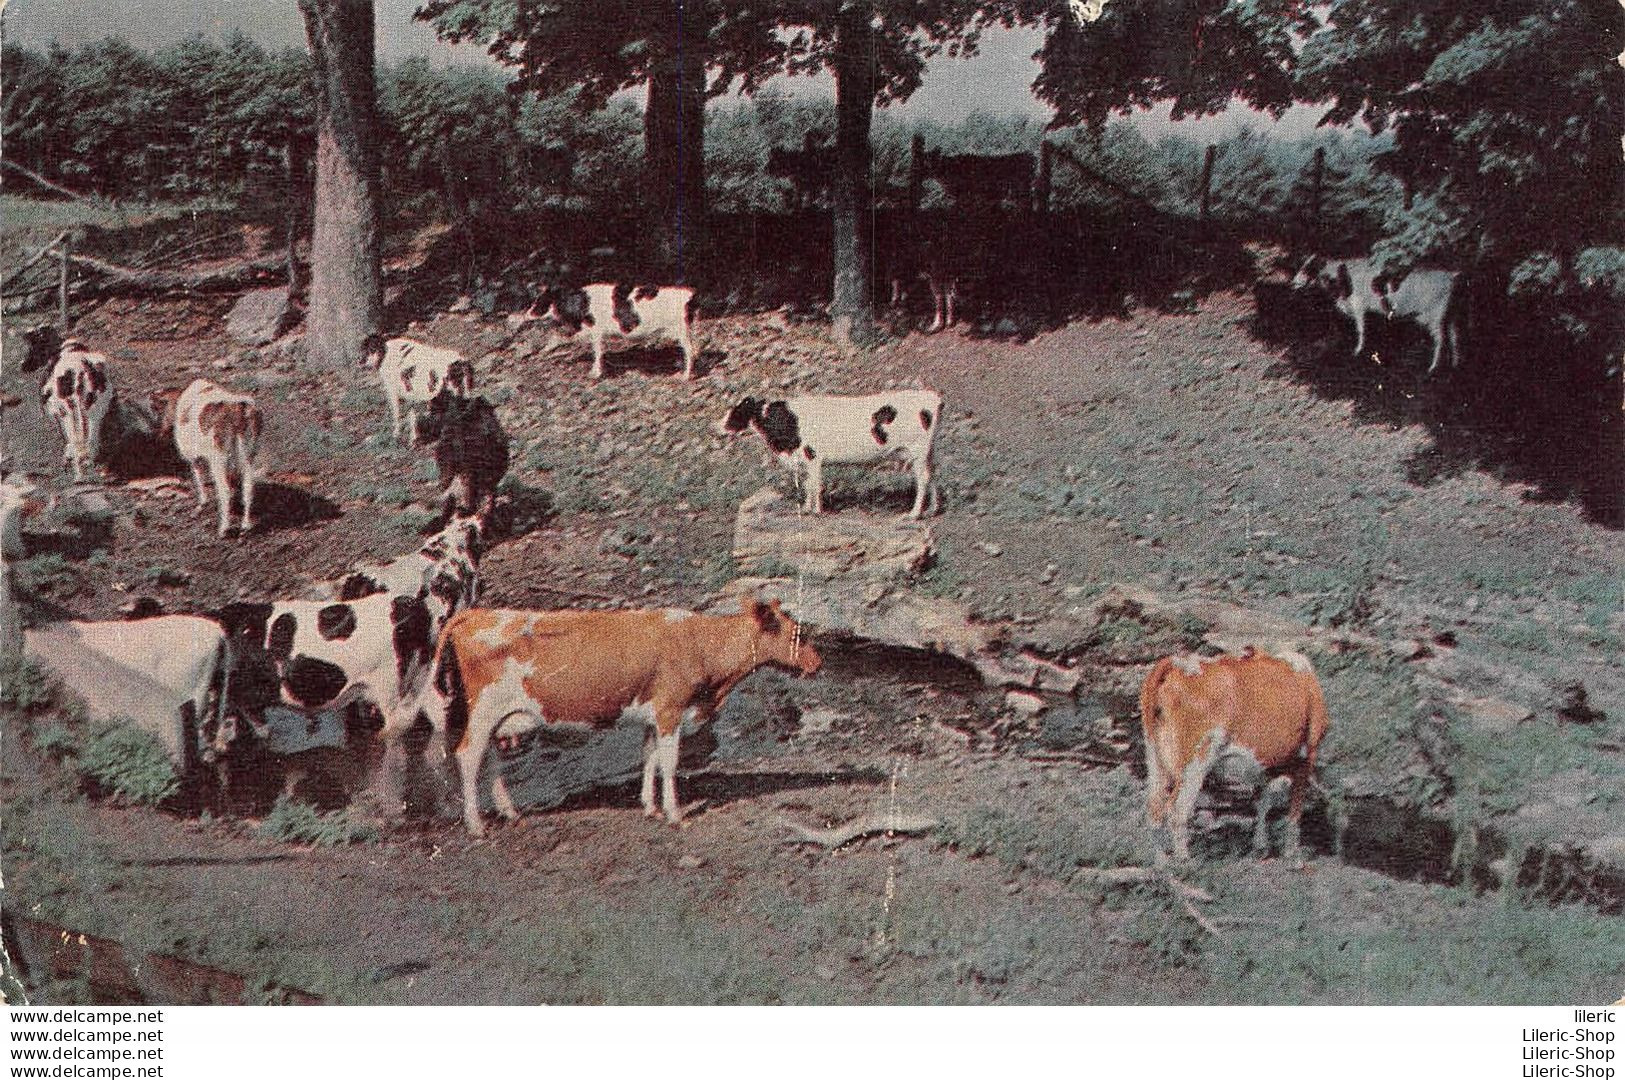 US POSTCARD COWS . A PASTORAL SCENE  - Cows